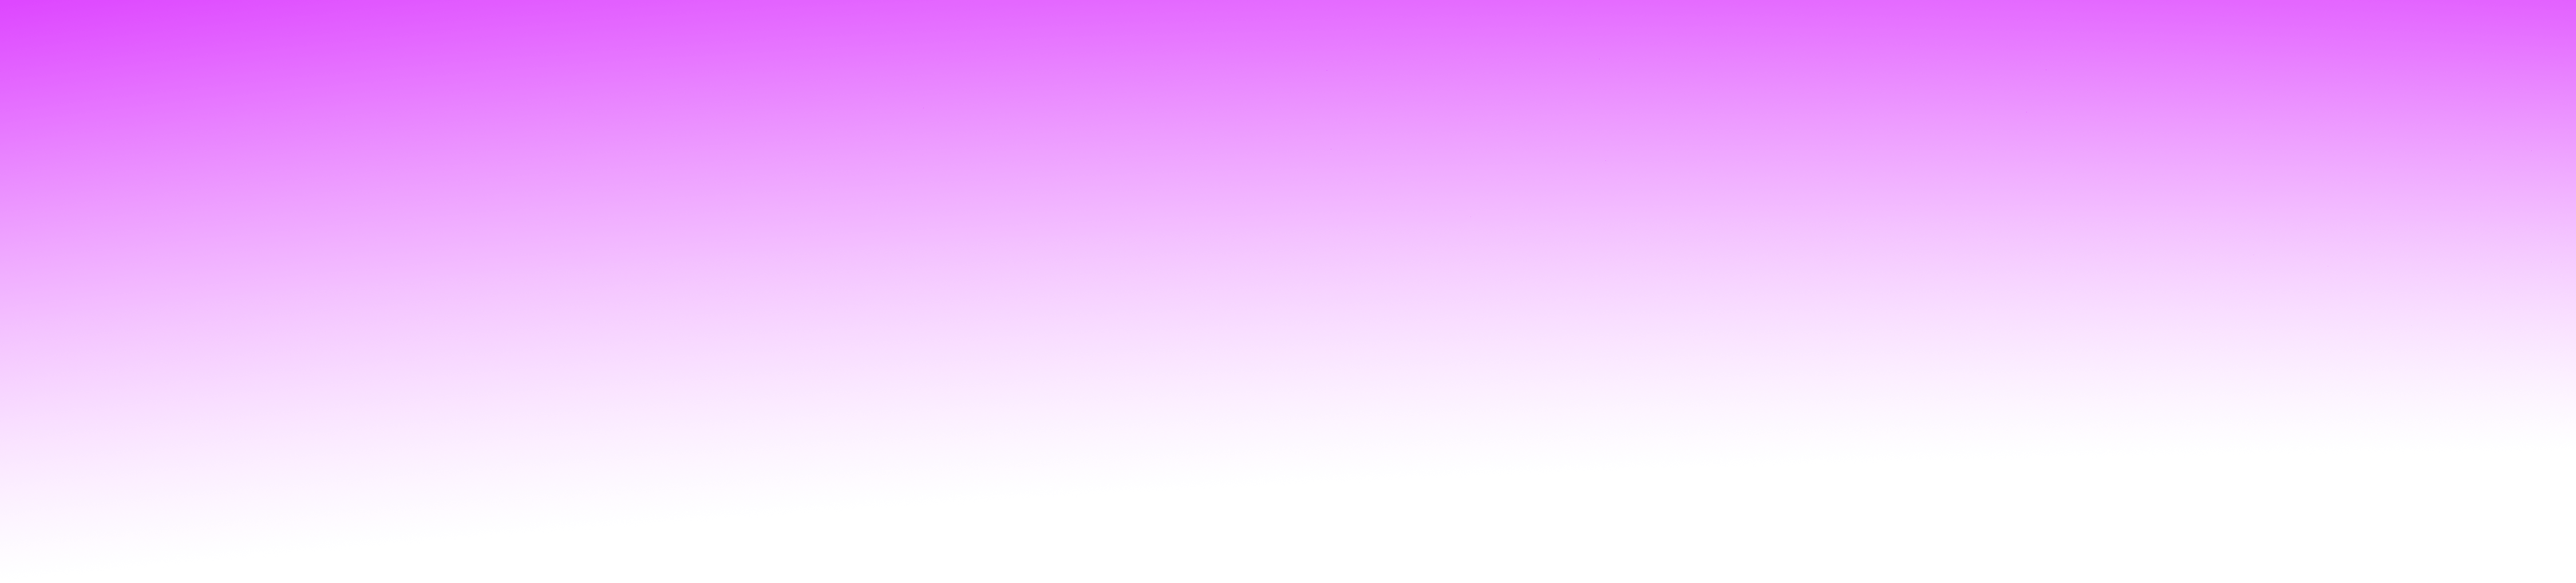 purple corner gradient